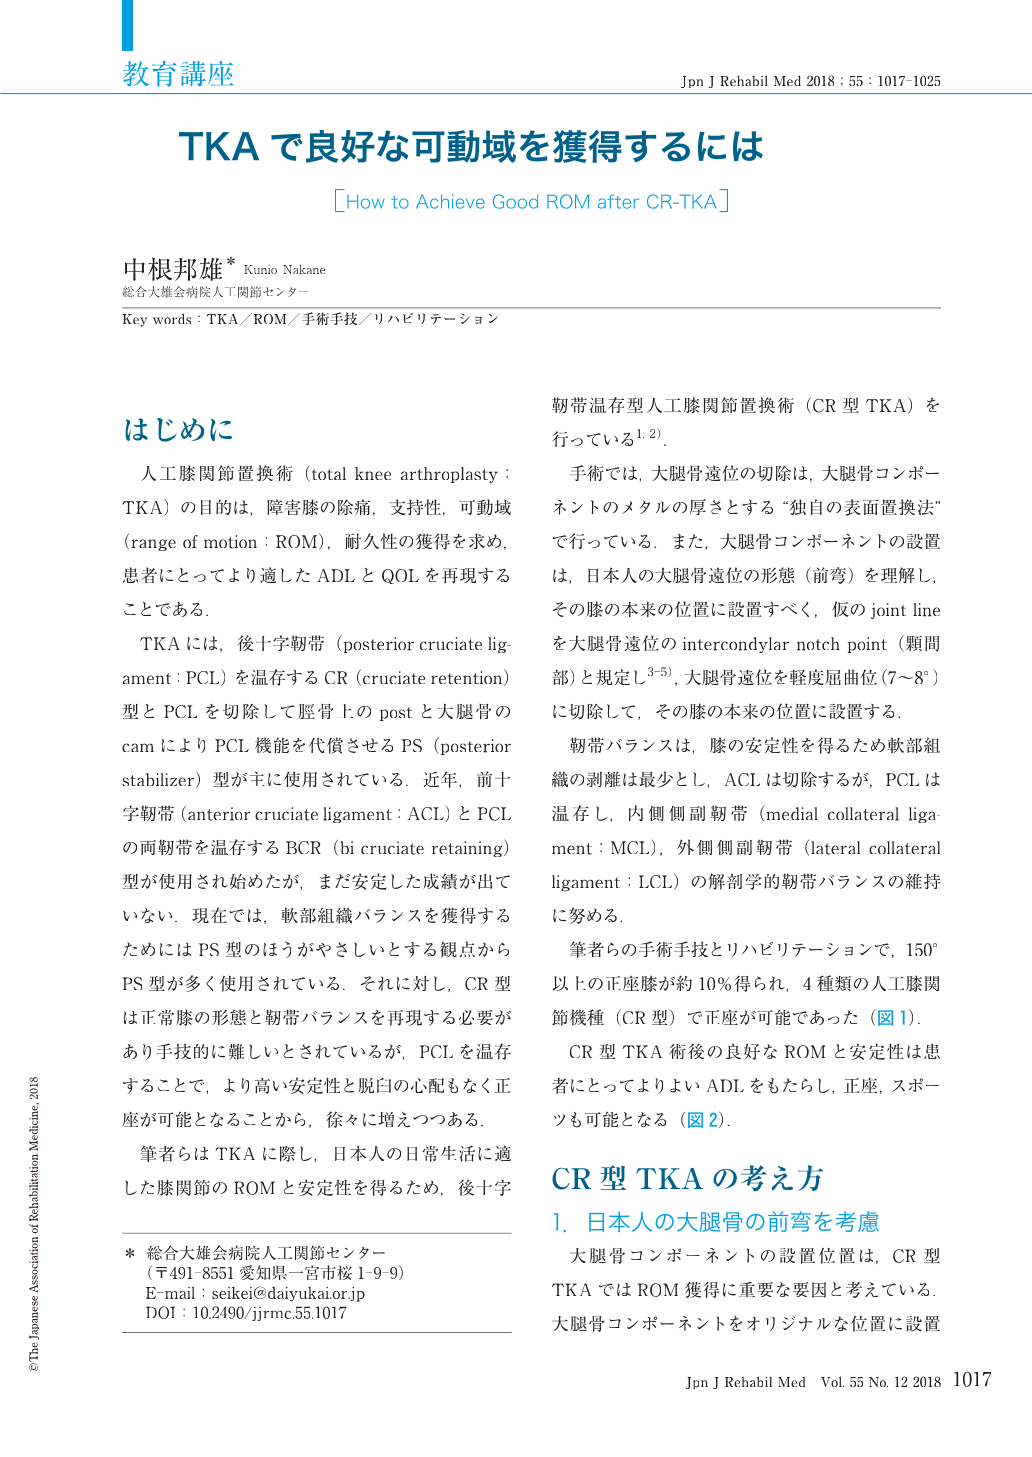 TKAで良好な可動域を獲得するには (The Japanese Journal of Rehabilitation Medicine 55巻12号)  | 医書.jp